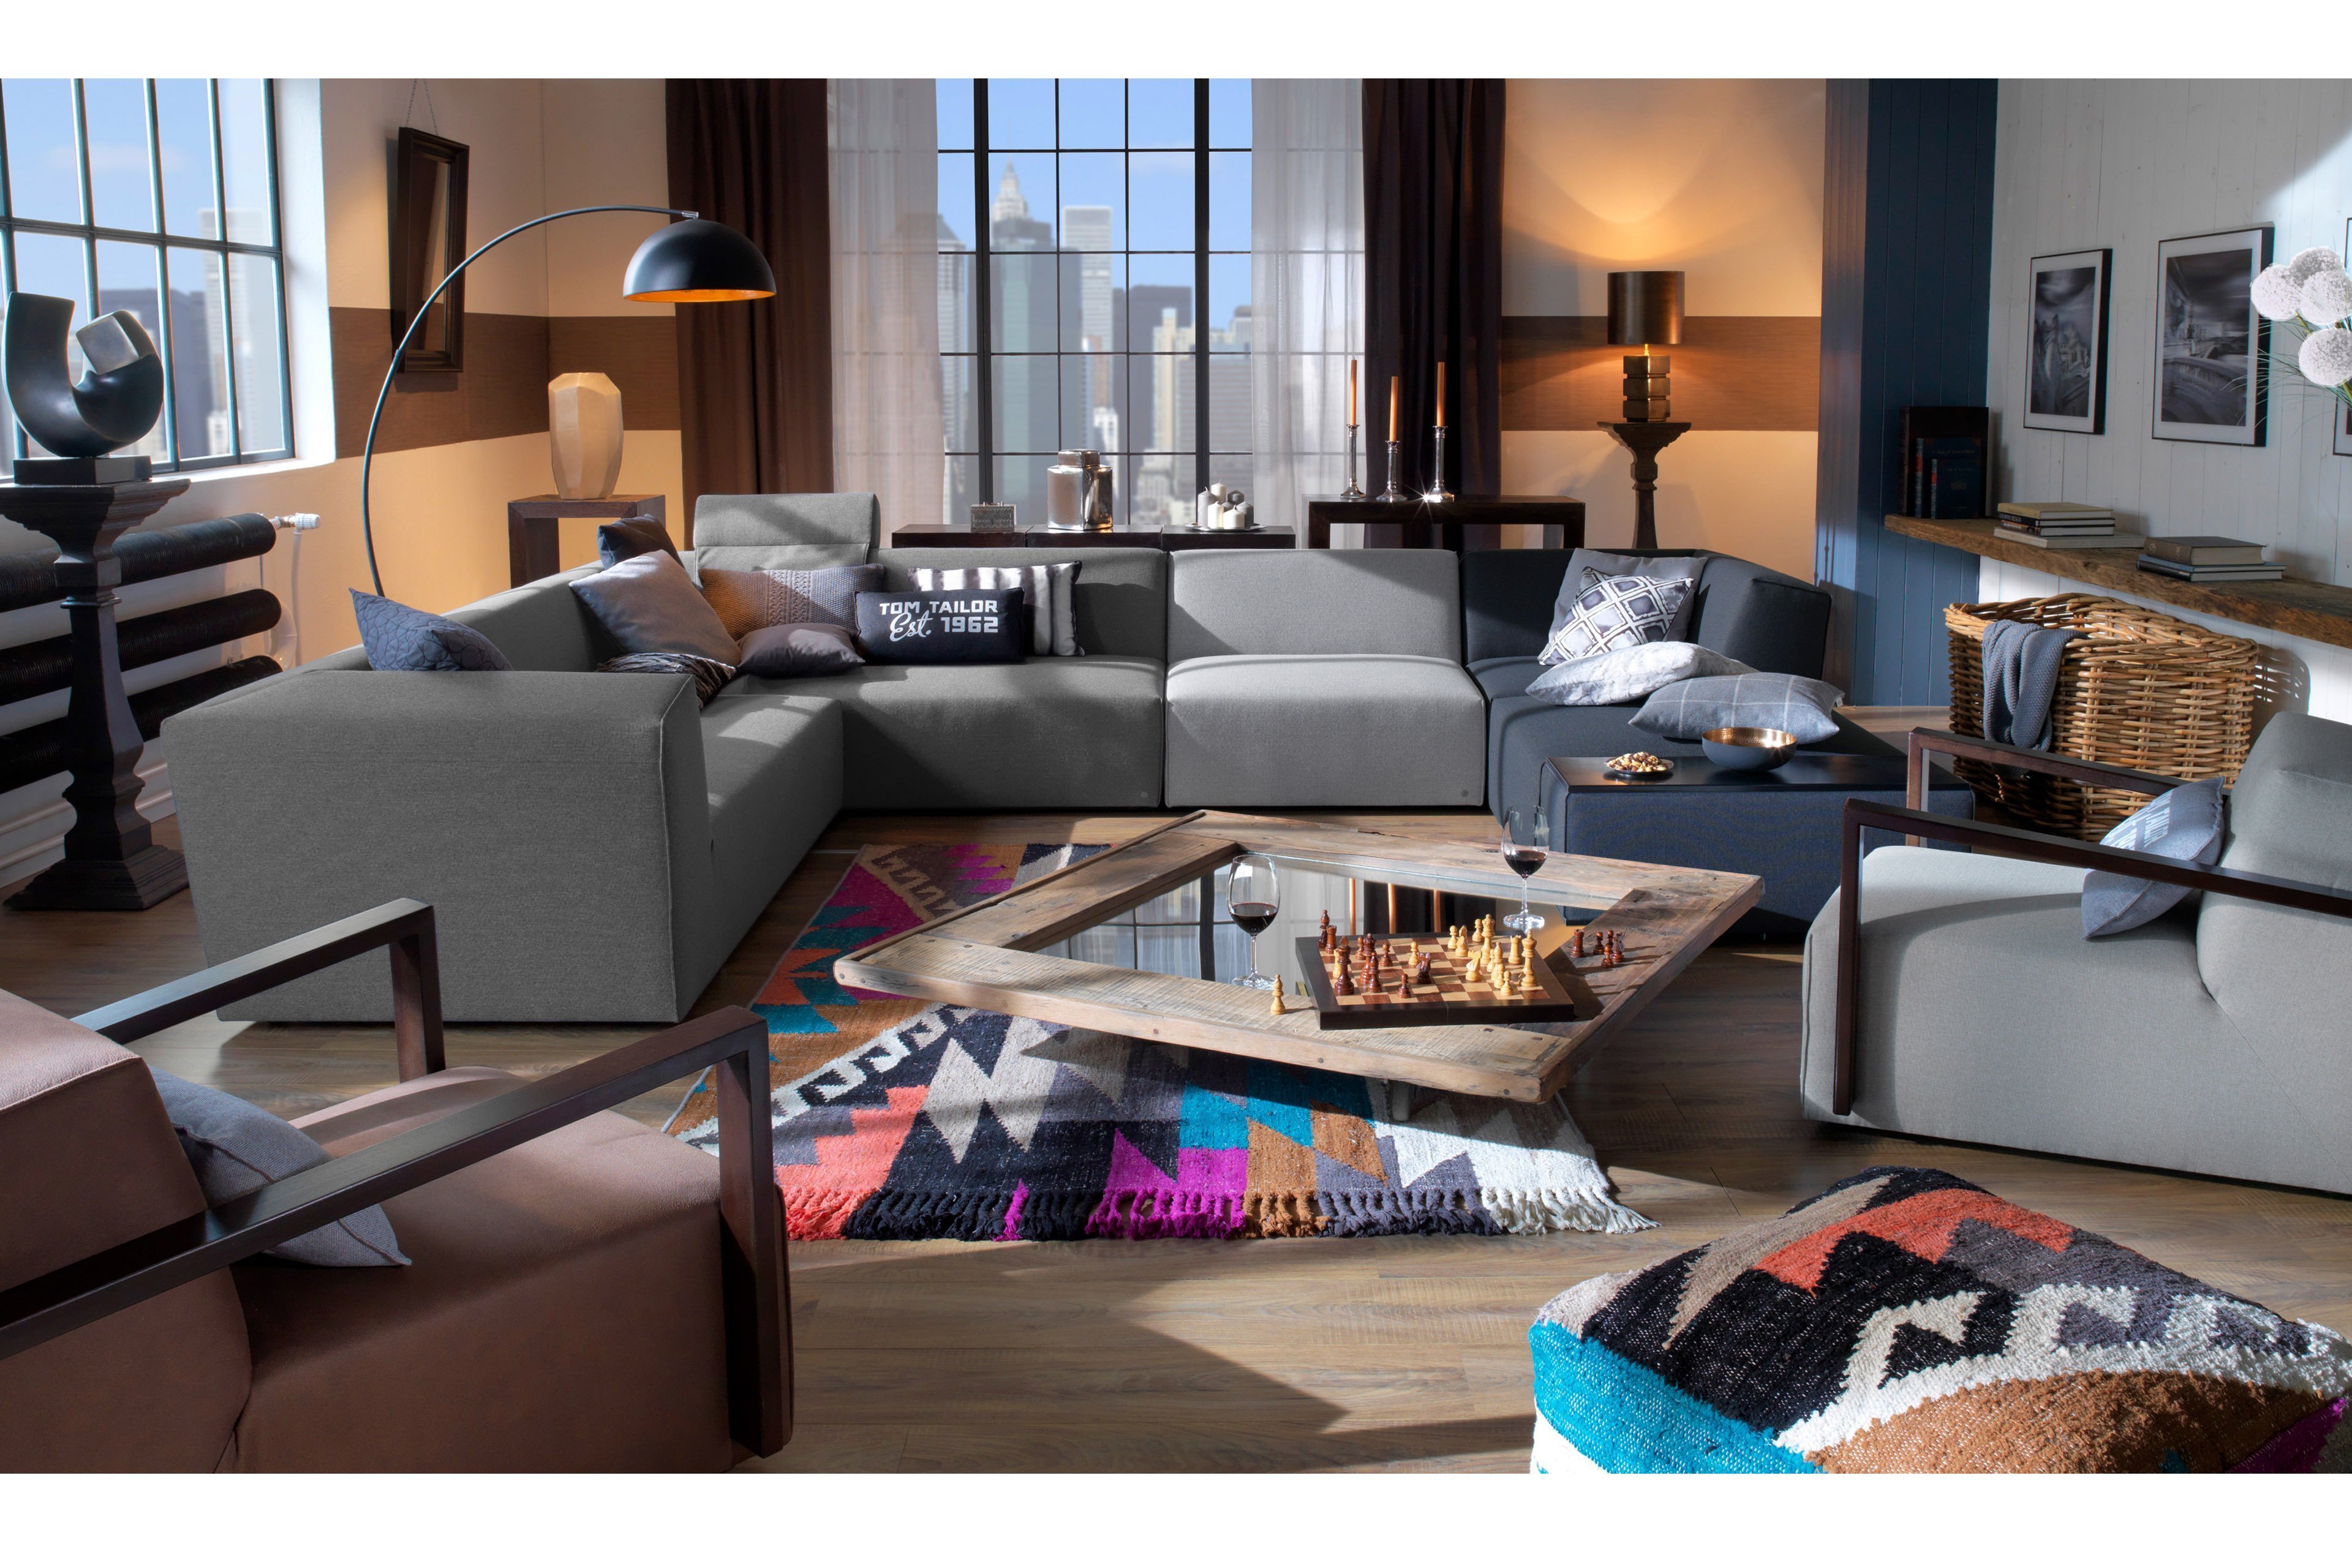 5844 Möbel Ihr Sofa in Tom mehrfarbig U-Form - Letz Elements Tailor Online-Shop |